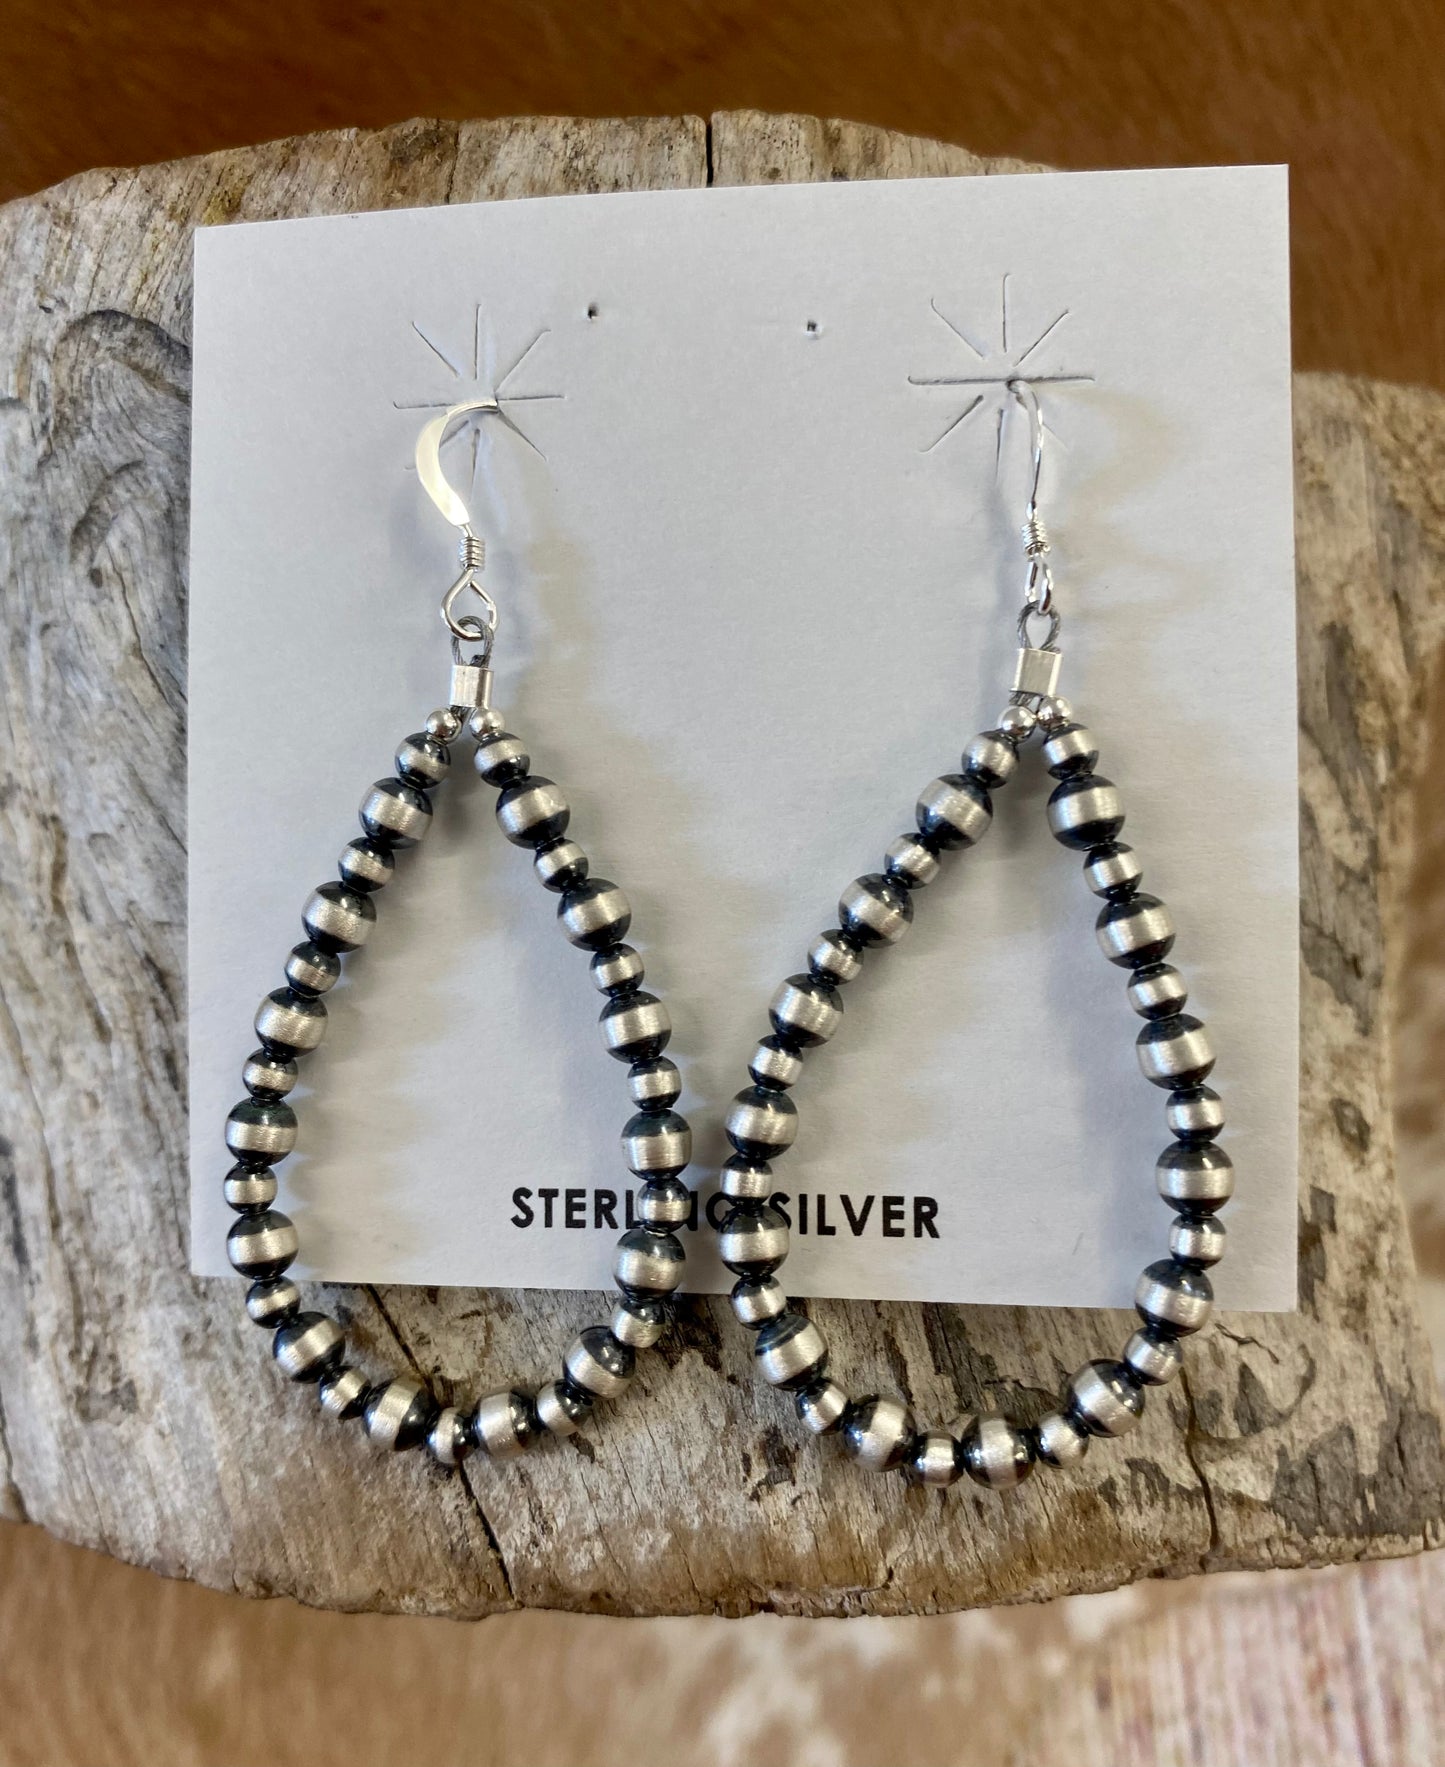 The 2” Length Navajo Pearl Earrings